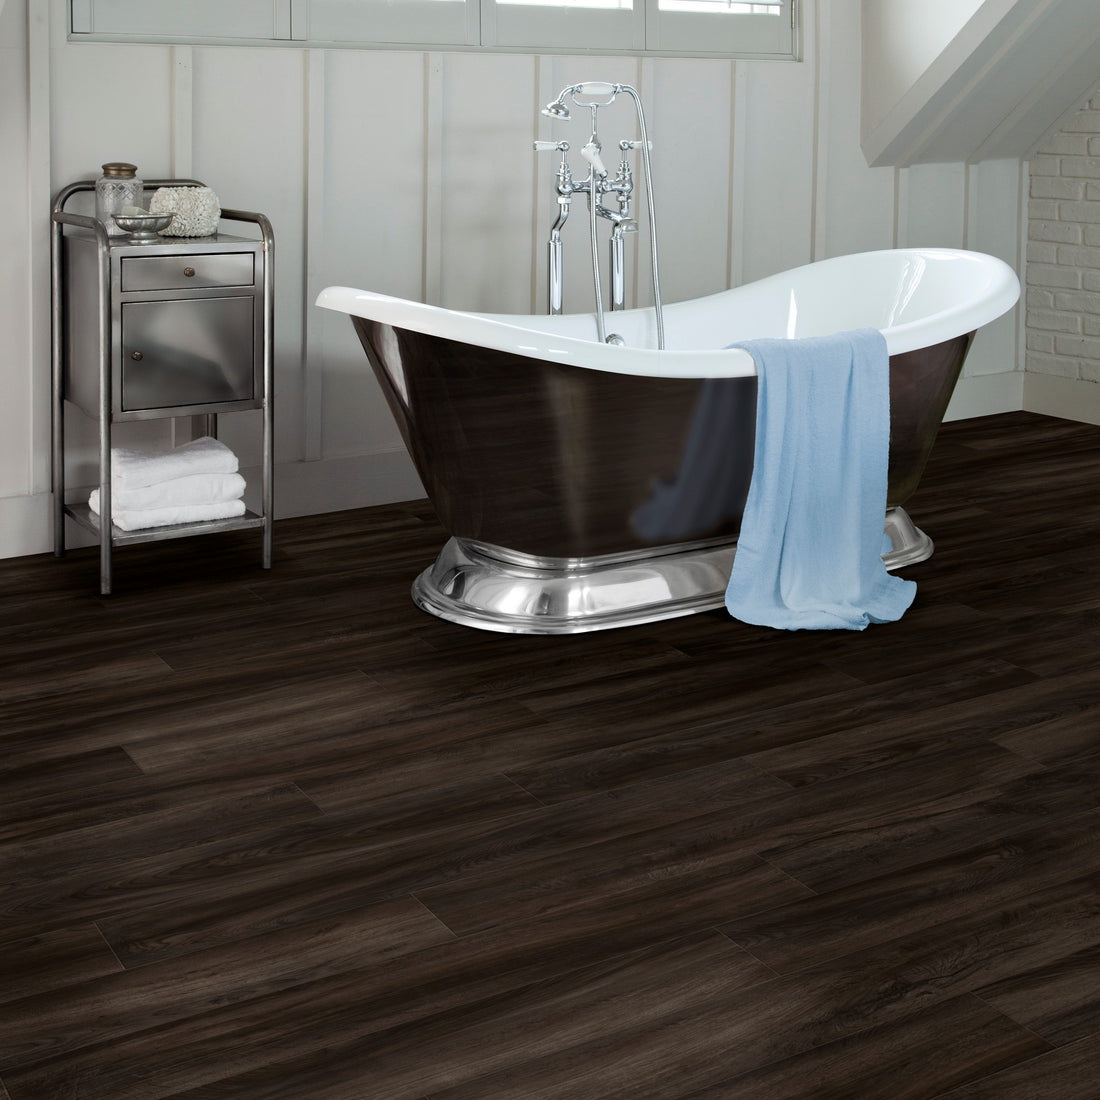 Kompact KlickFloor - Huckleberry Black Oak vinyl bathroom flooring with bathtub 82991